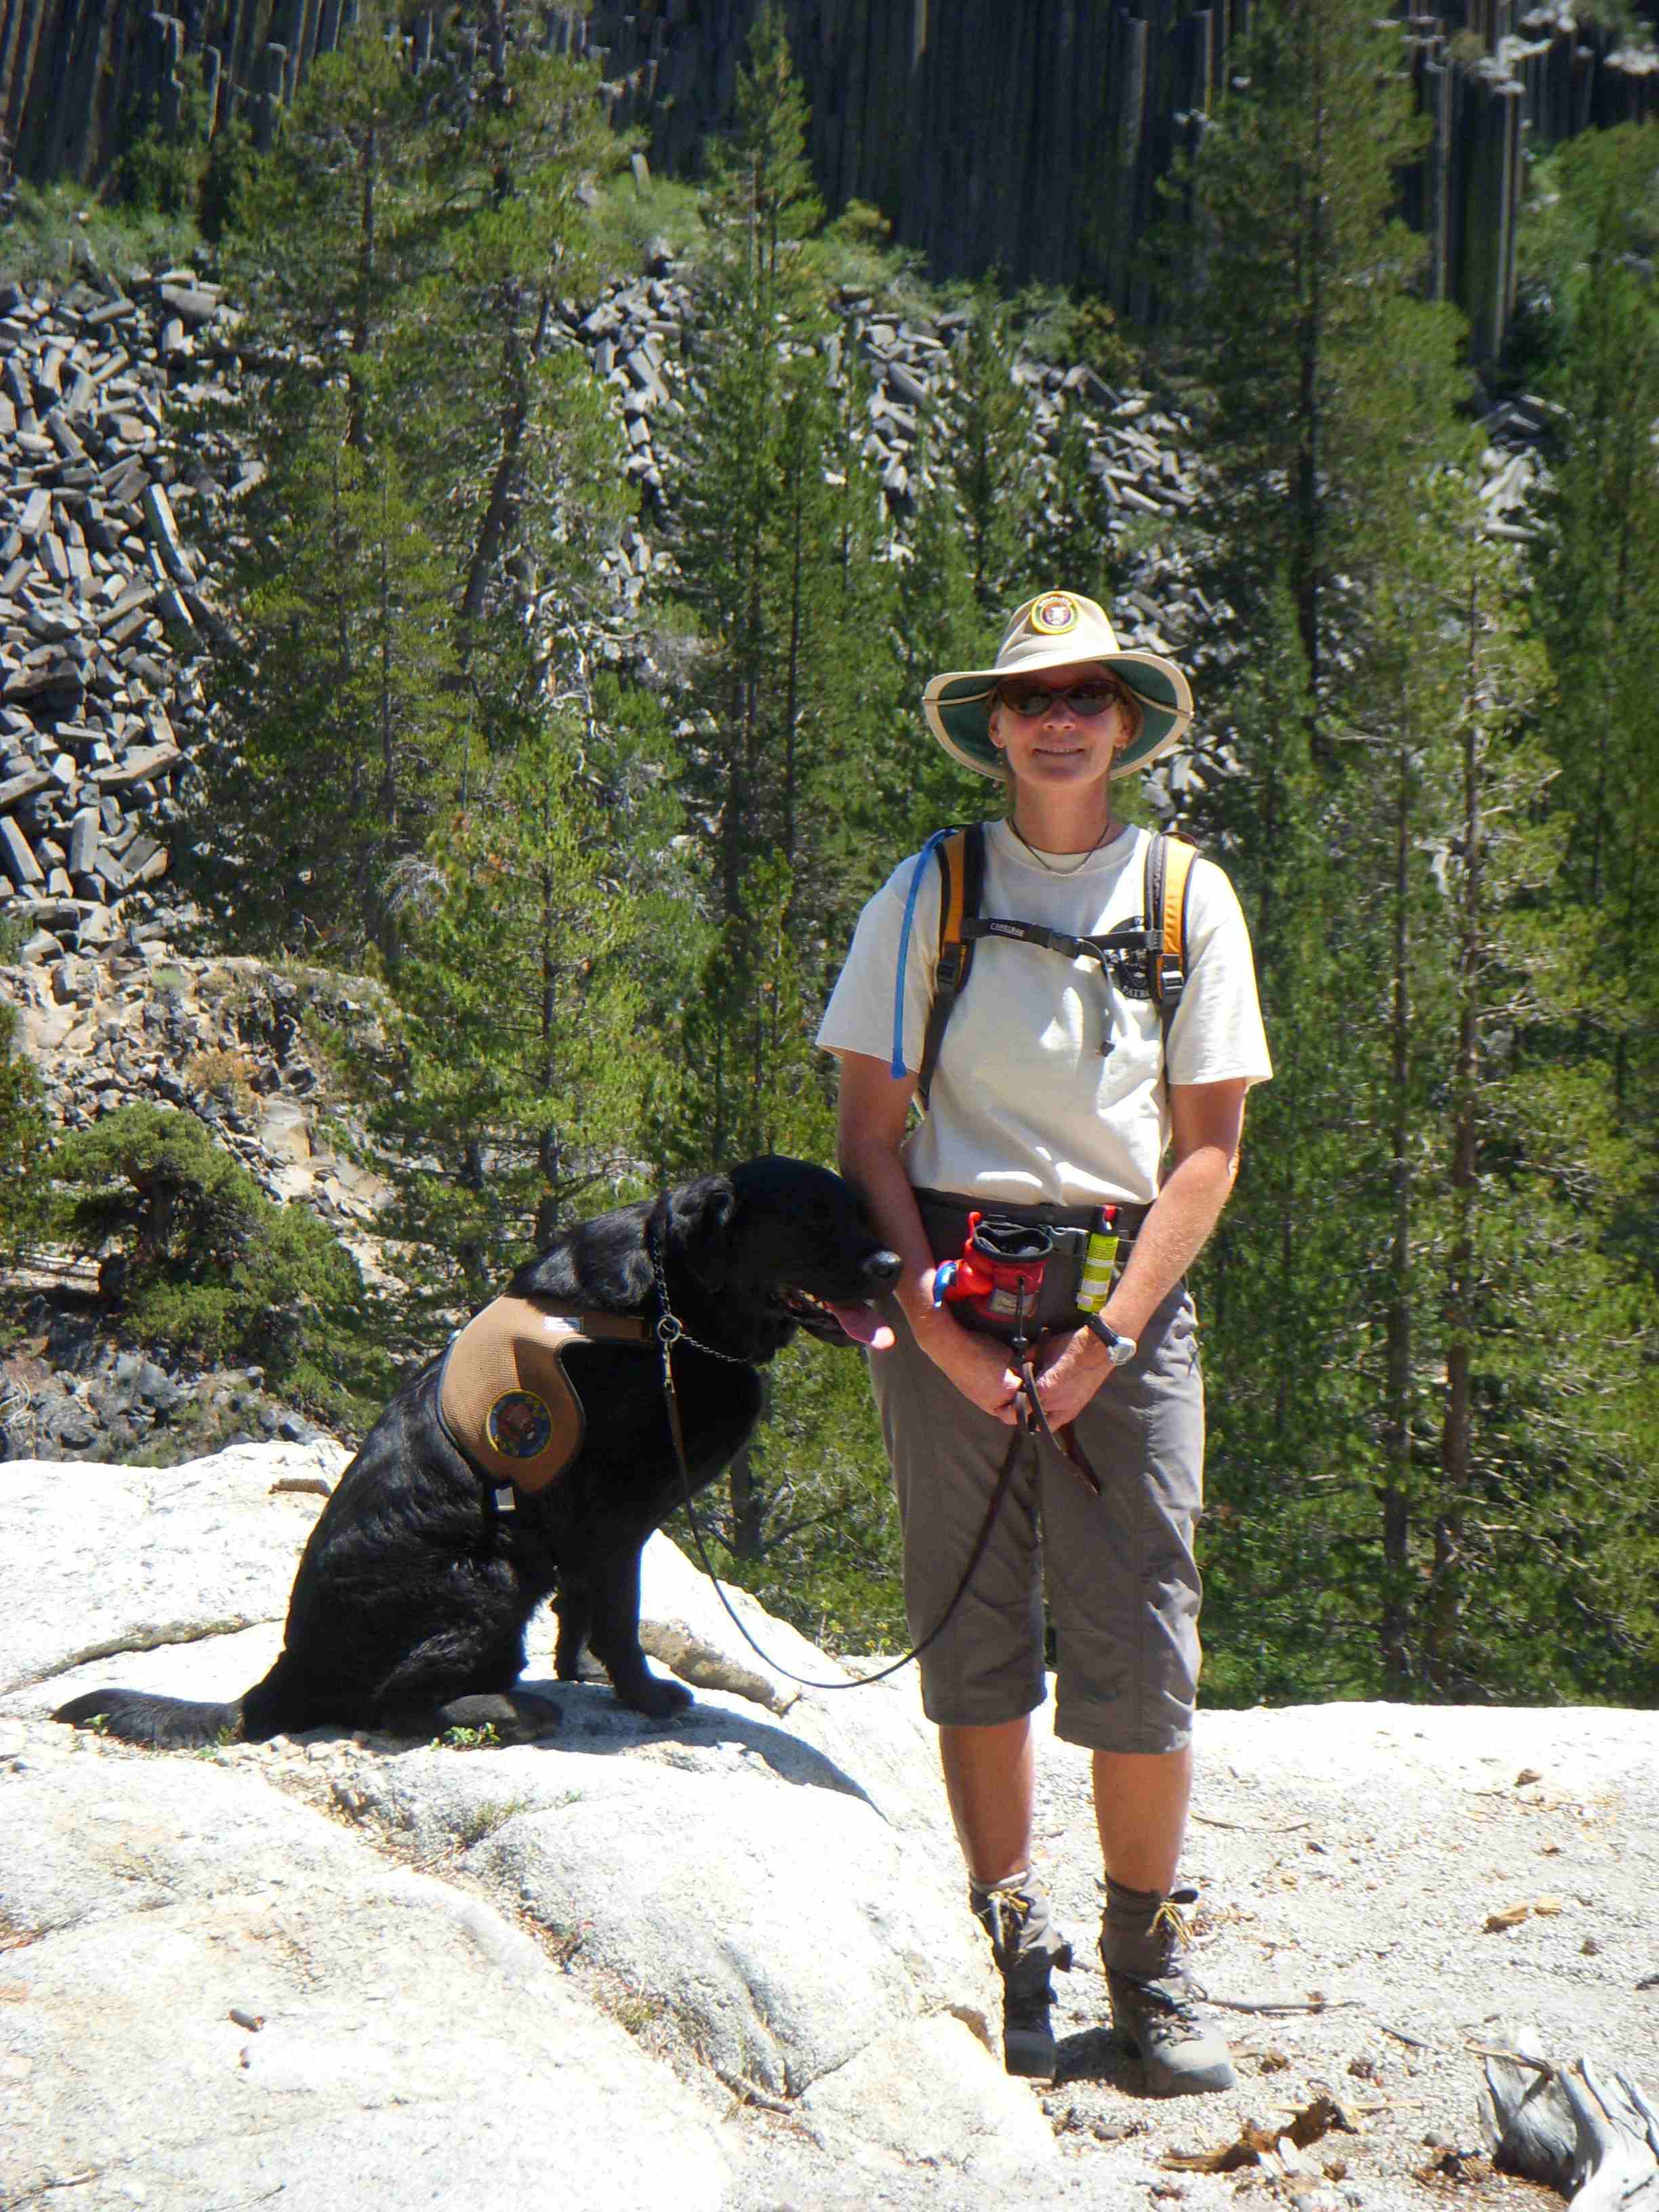 Volunteer Laura patrols the John Muir Trail with her dog Frasier